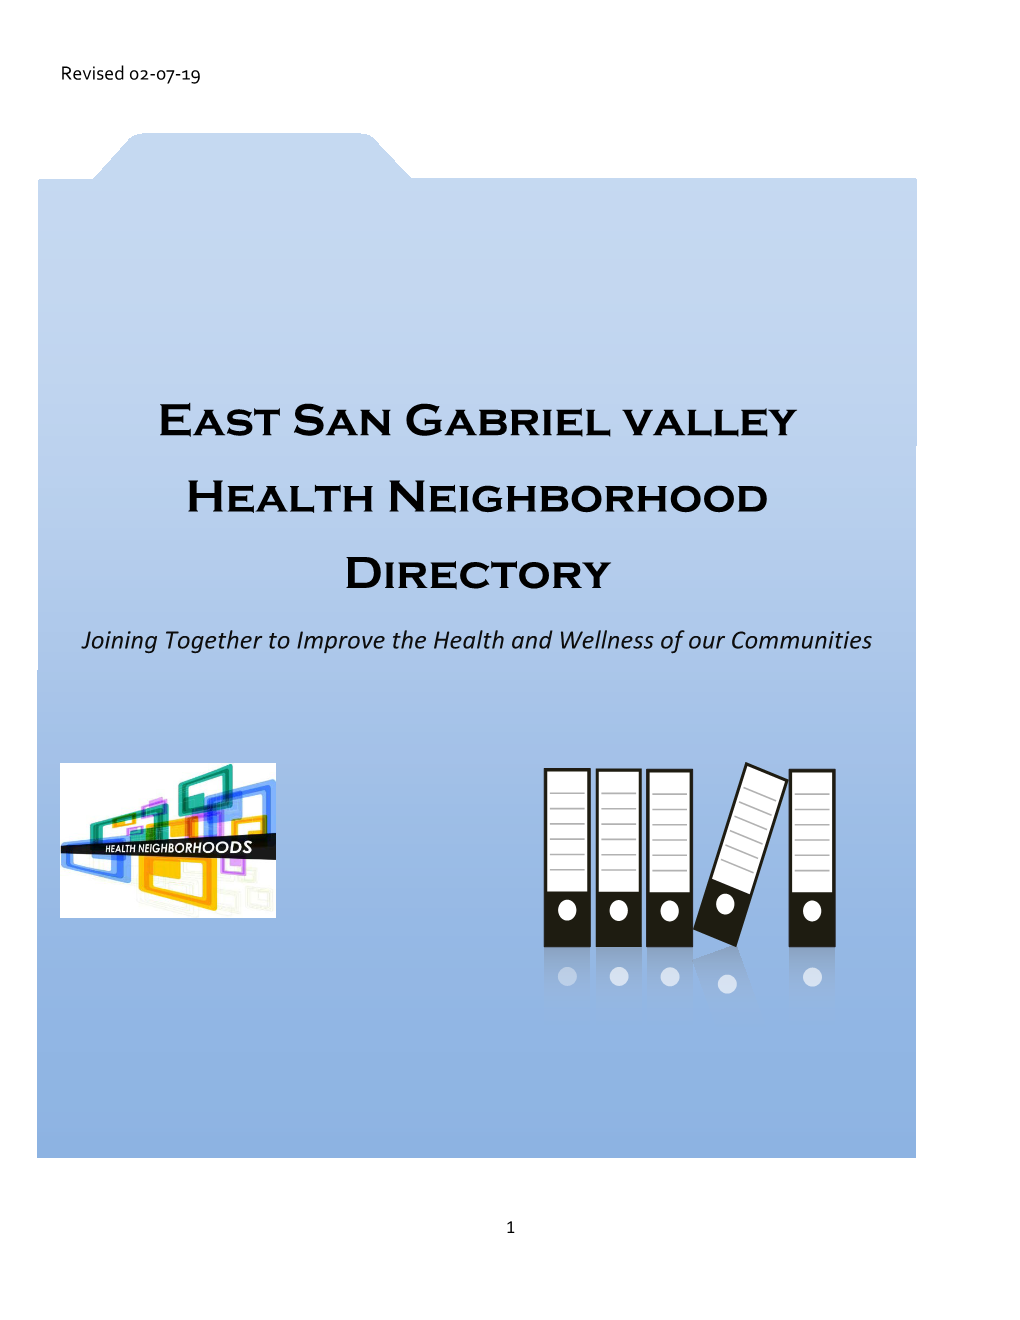 East San Gabriel Valley Health Neighborhood Directory